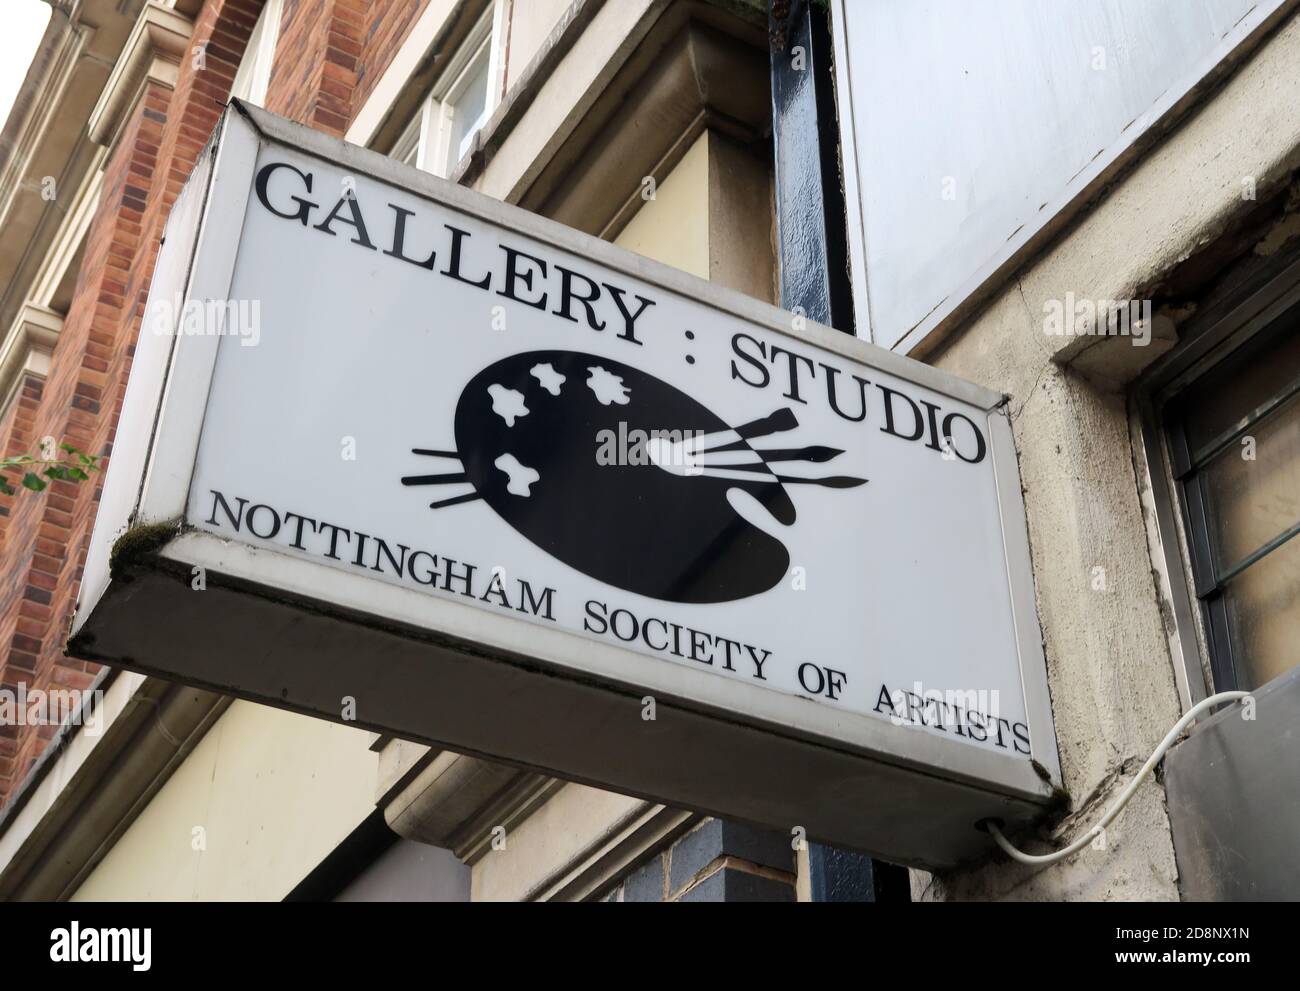 Gallery,Studio,Nottingham Society Of Artists, St Luke's House, 71 Friar Lane,England,UK Stock Photo